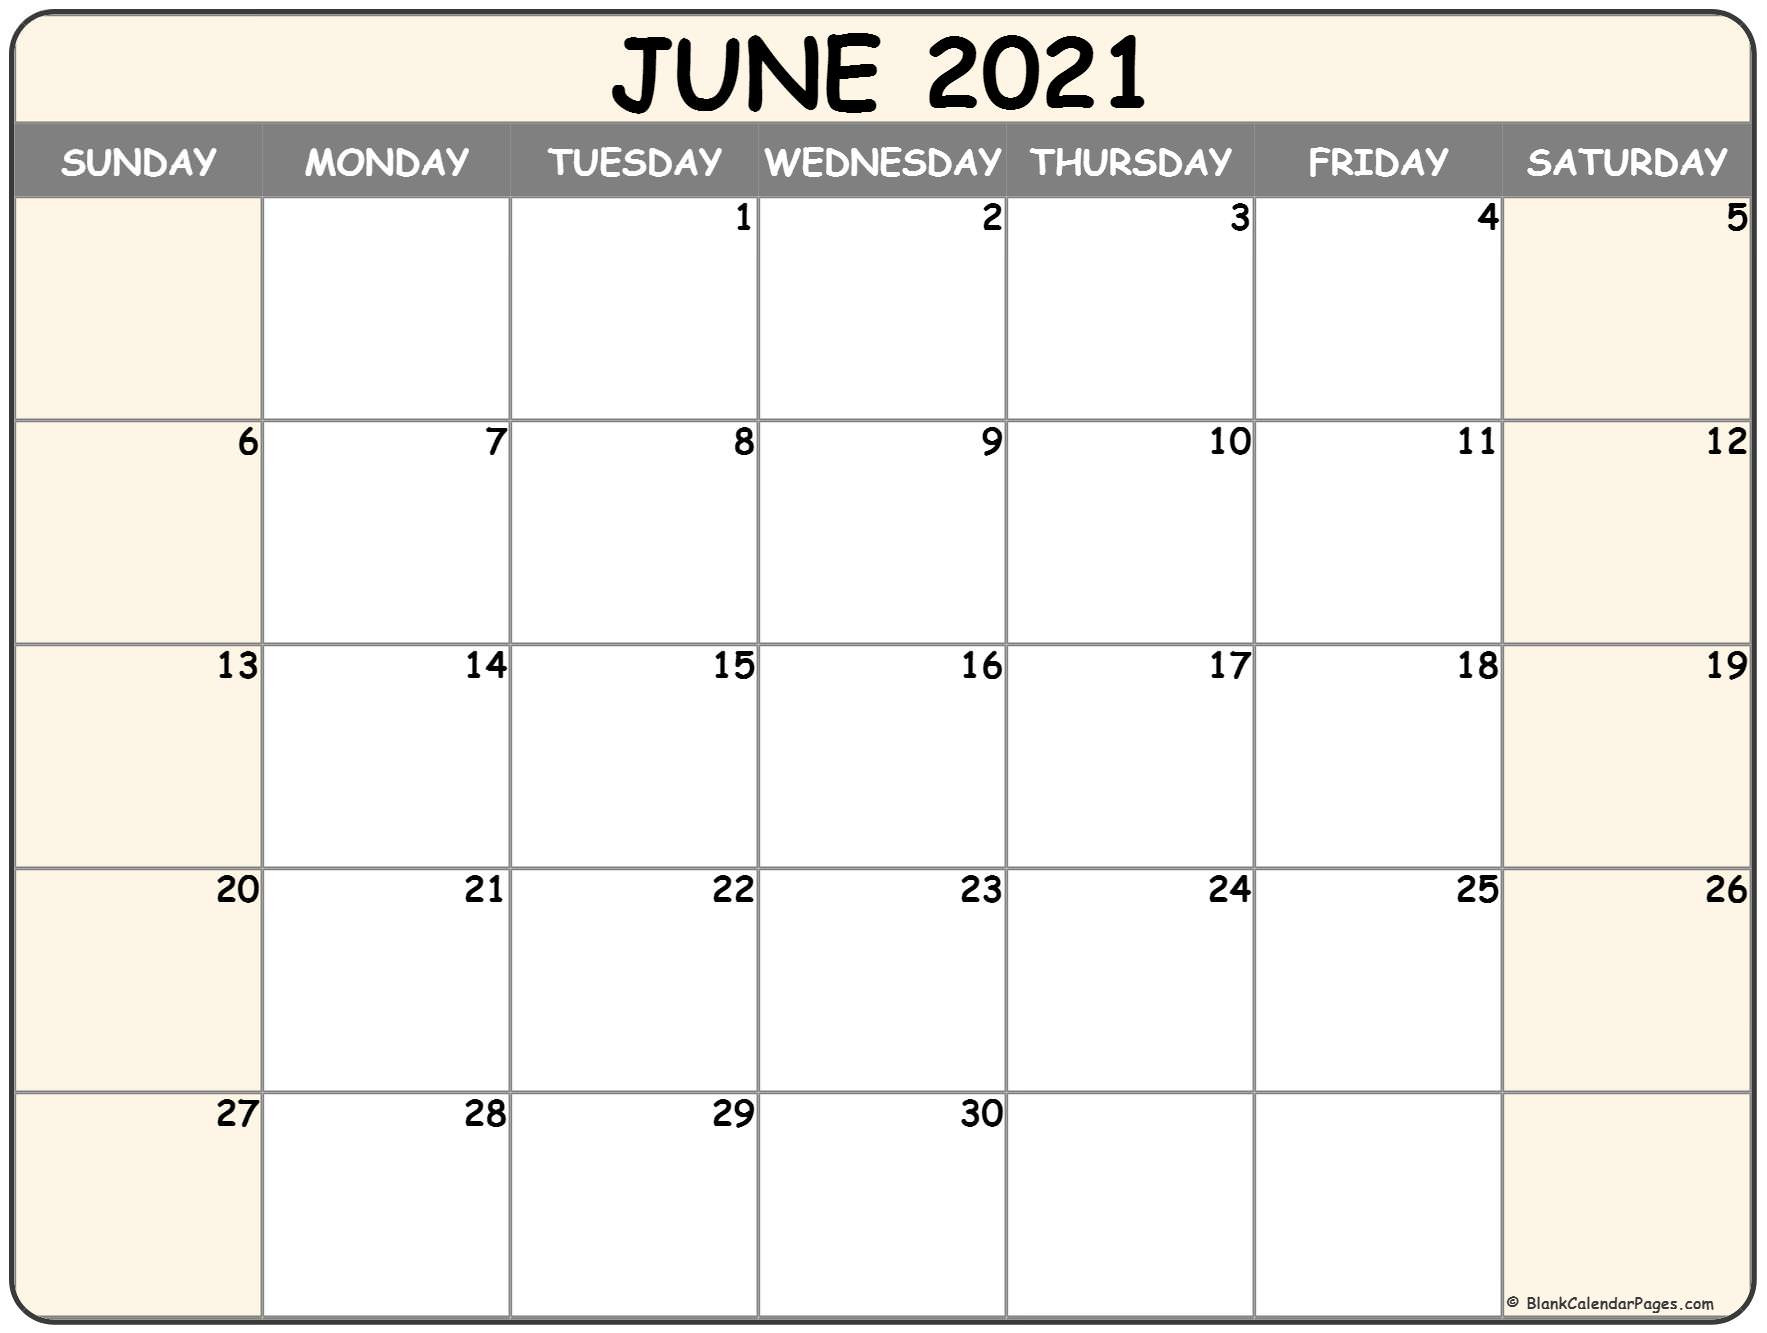 Sepetember 2021 Calendar With Big Numbers | Calendar-Free 2021 June Calendars That Can Be Edited